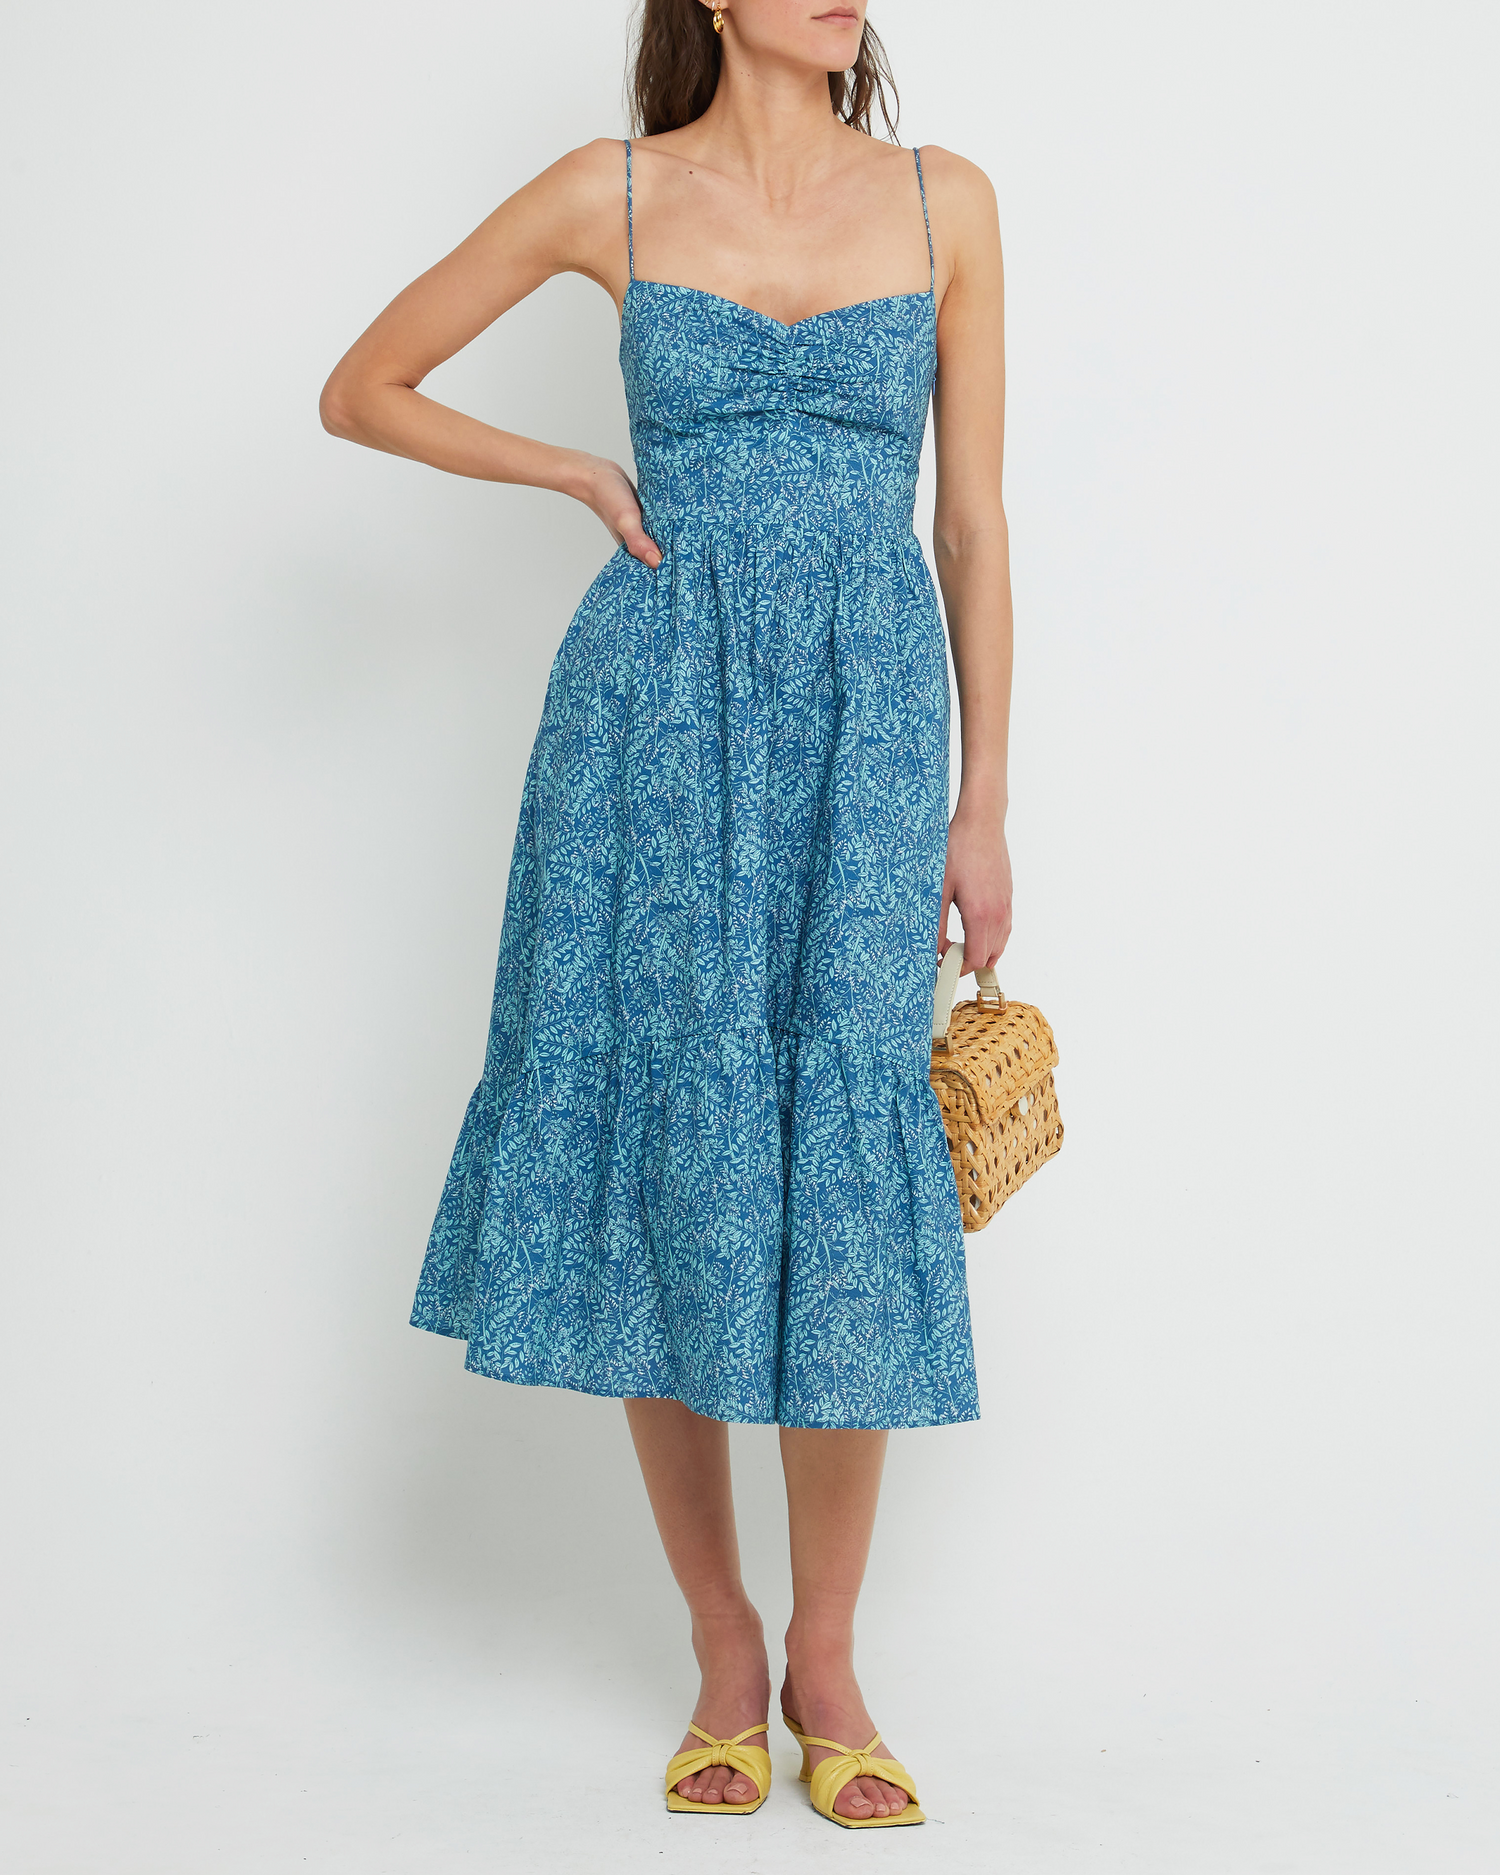 Fourth image of Momo Dress, a blue midi dress, sweatheart neckline, spaghetti straps, floral